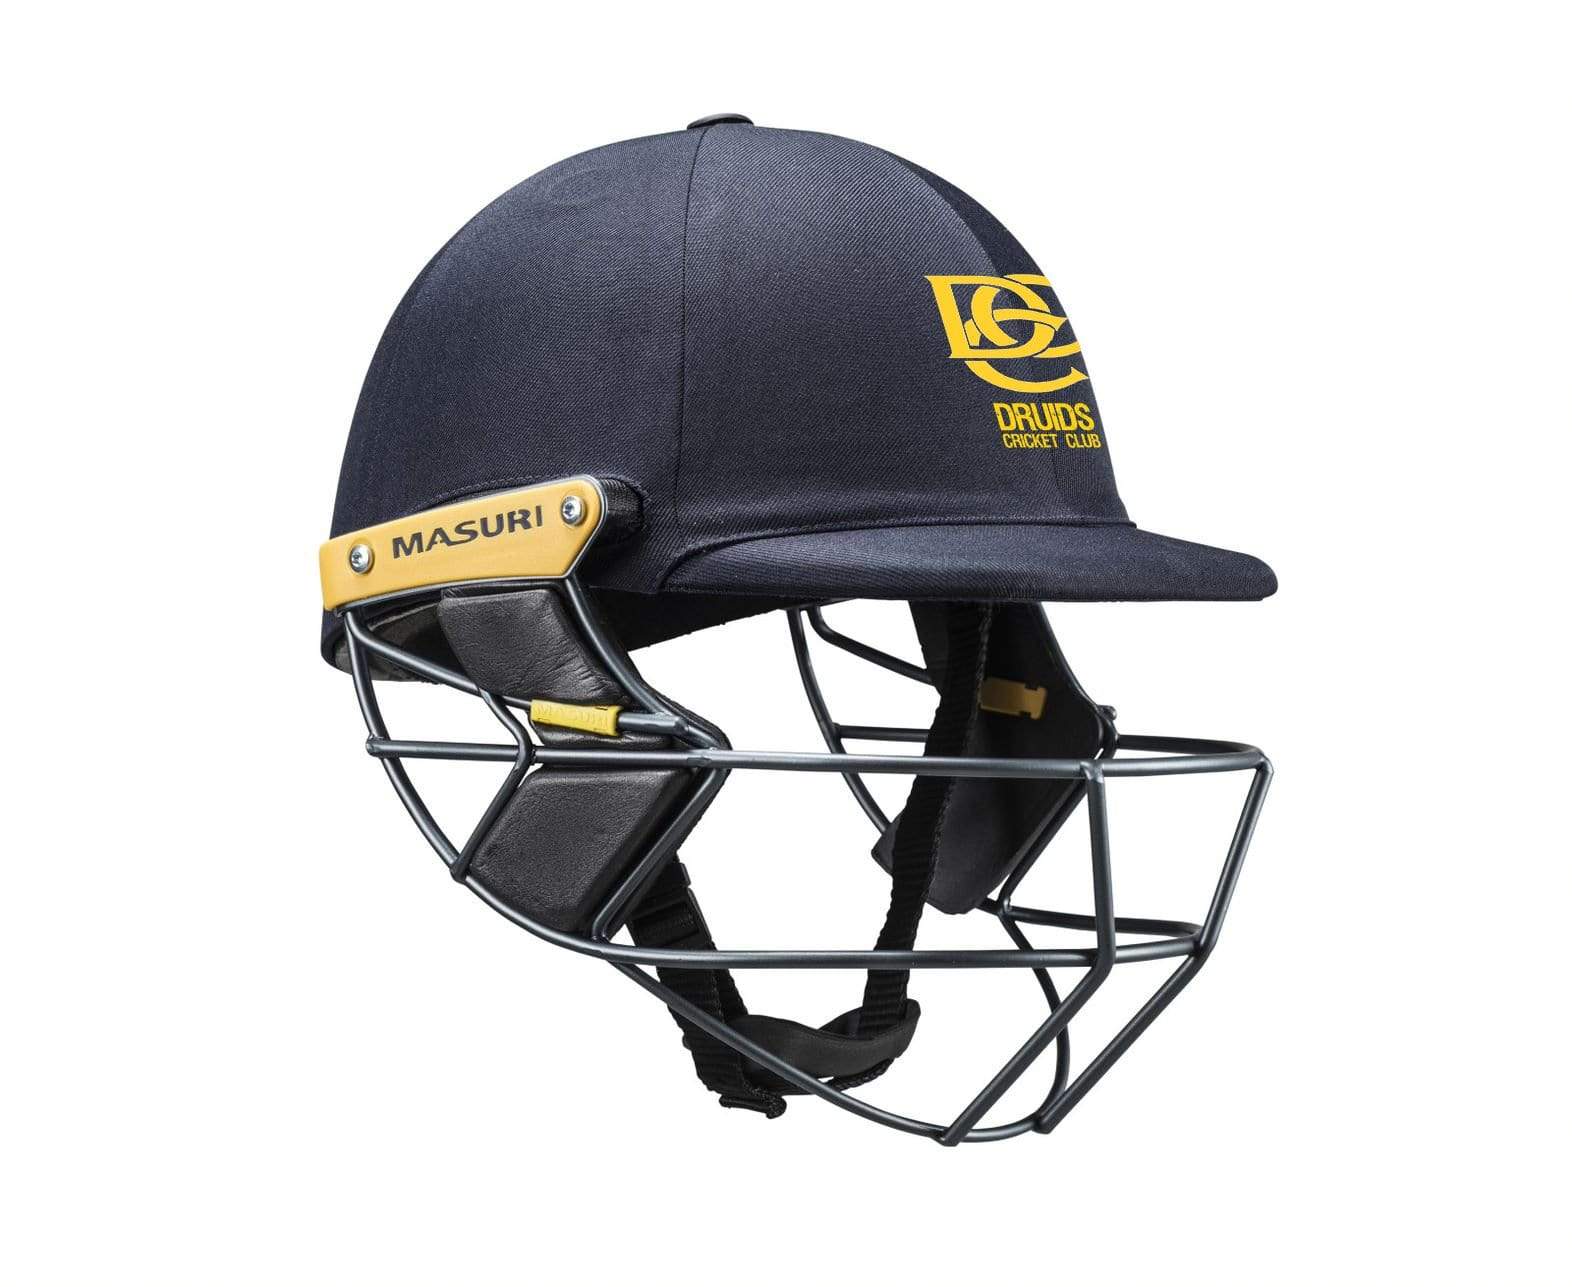 Masuri Club Helmet Druids Cricket Club Helmet